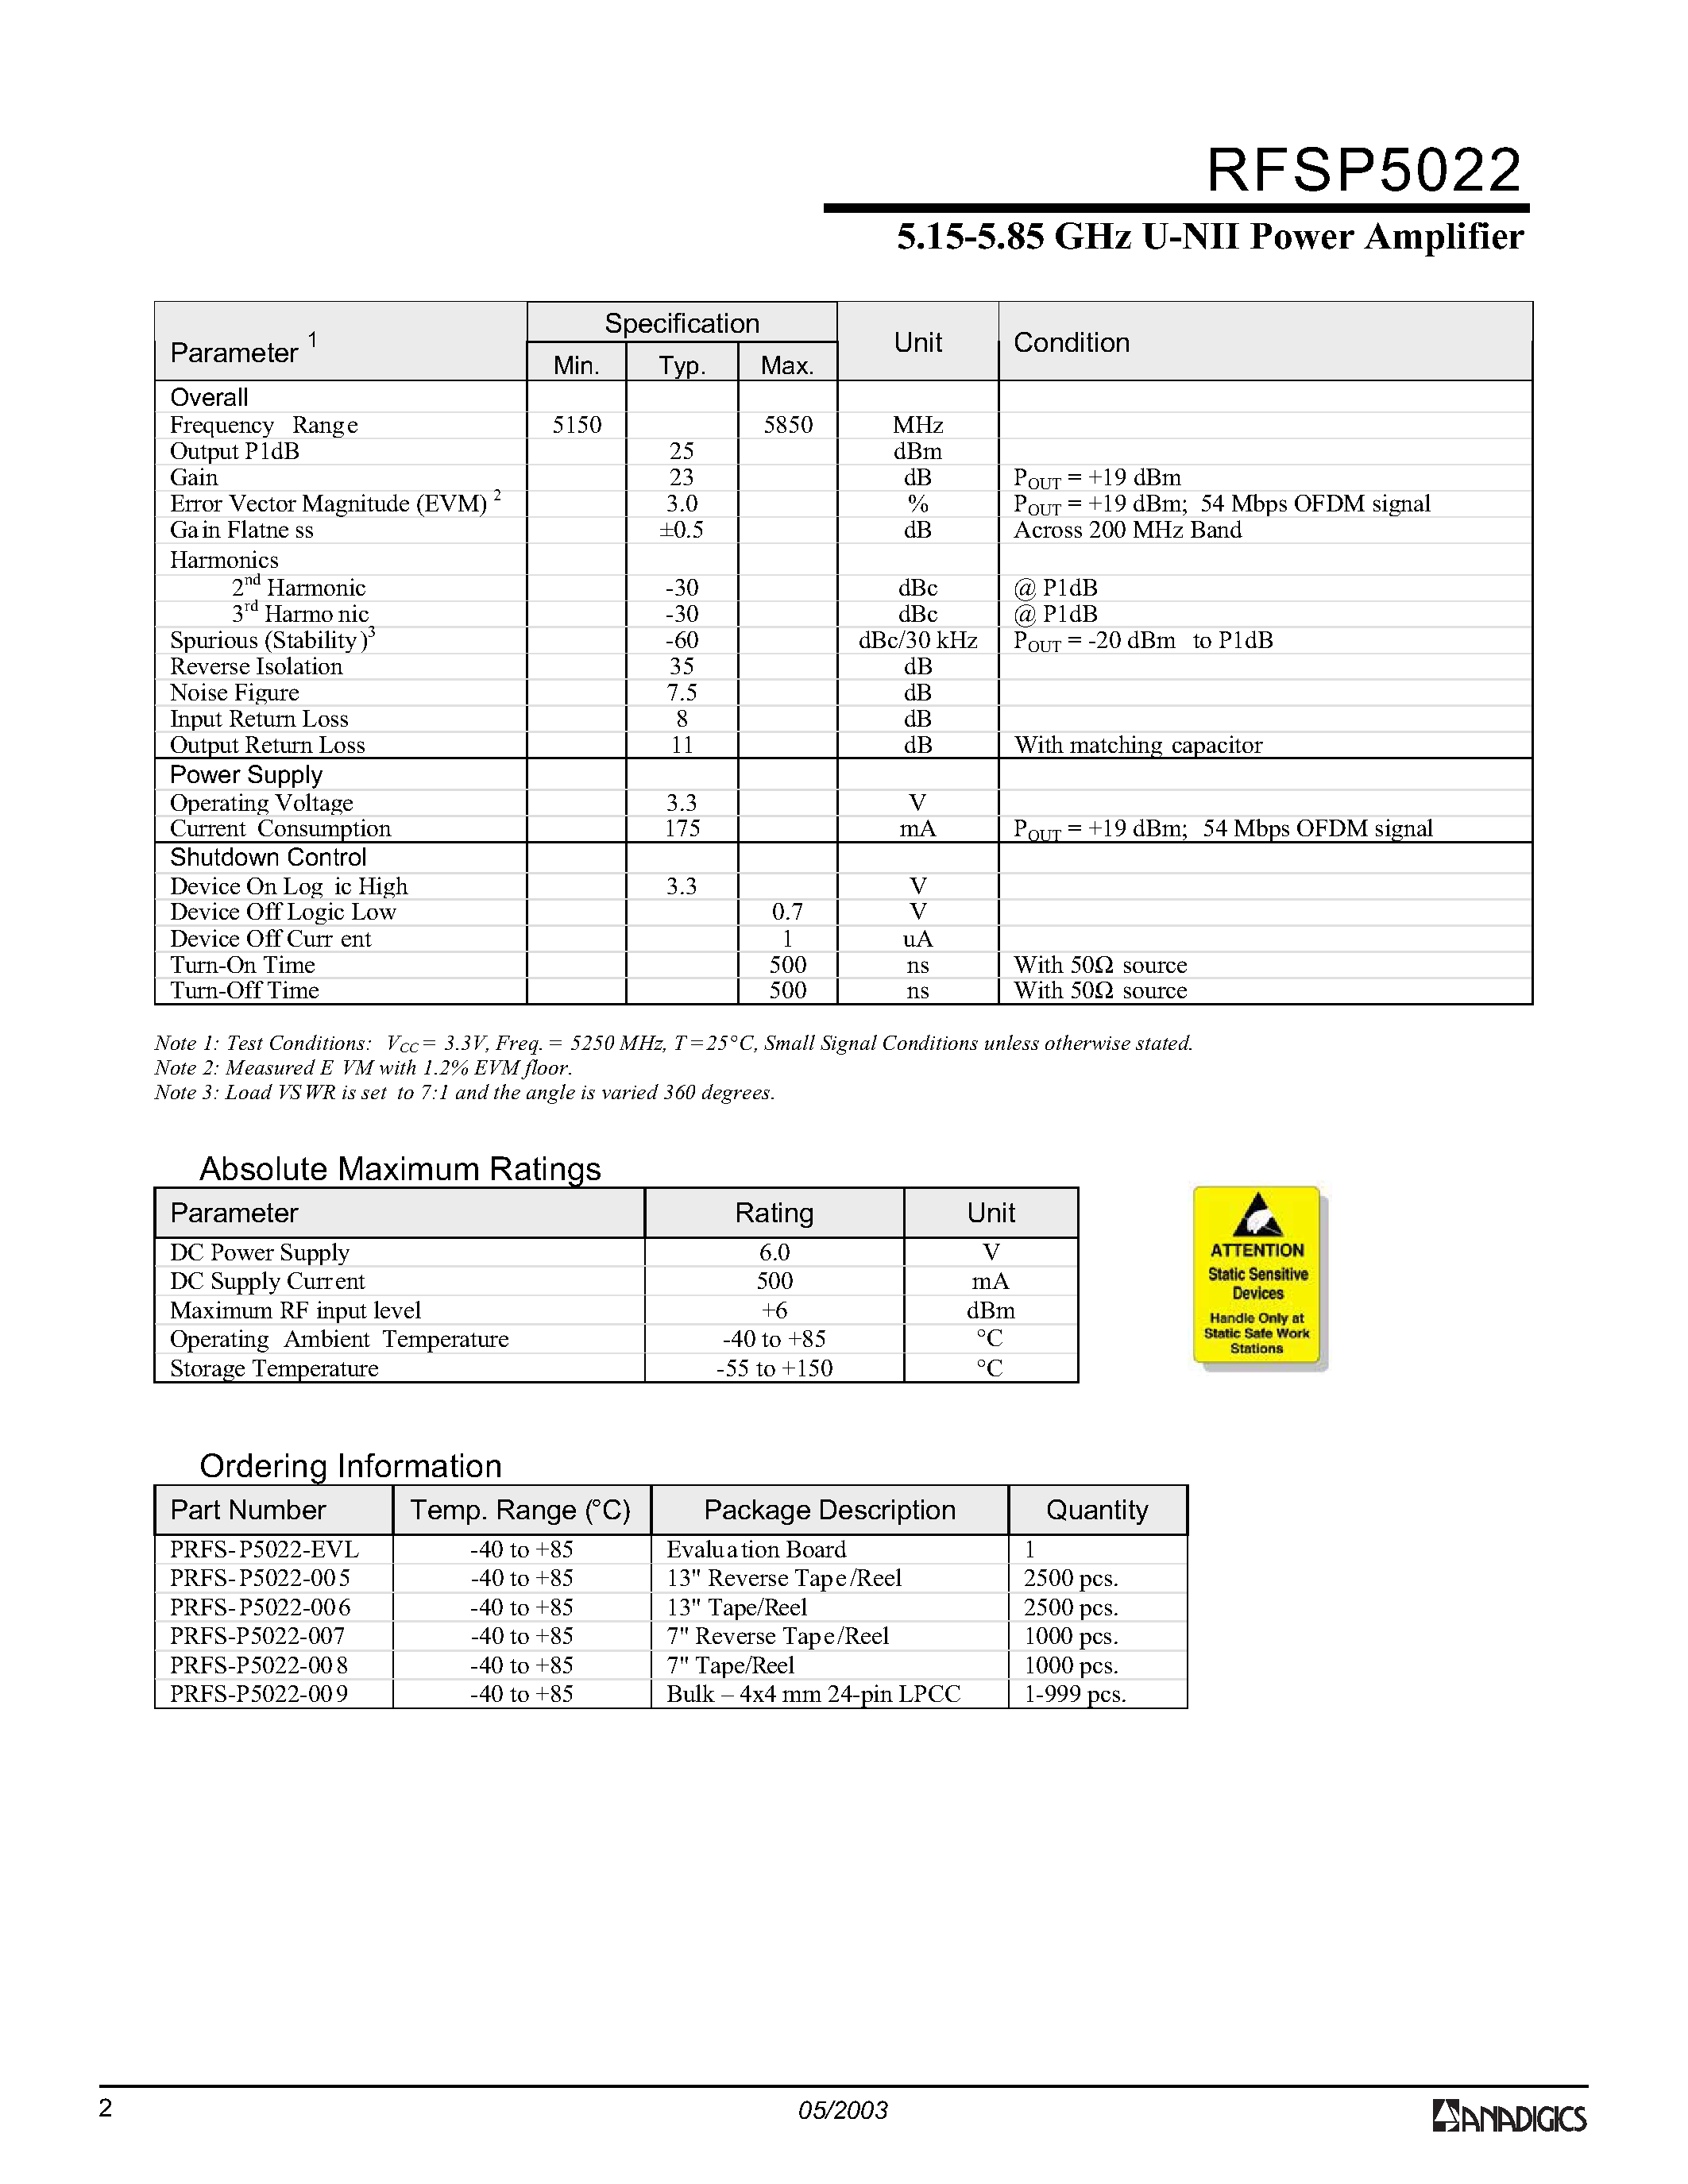 Datasheet PRFS-P5022-006 - 5.15-5.85 GHz U-NII Power Amplifier page 2